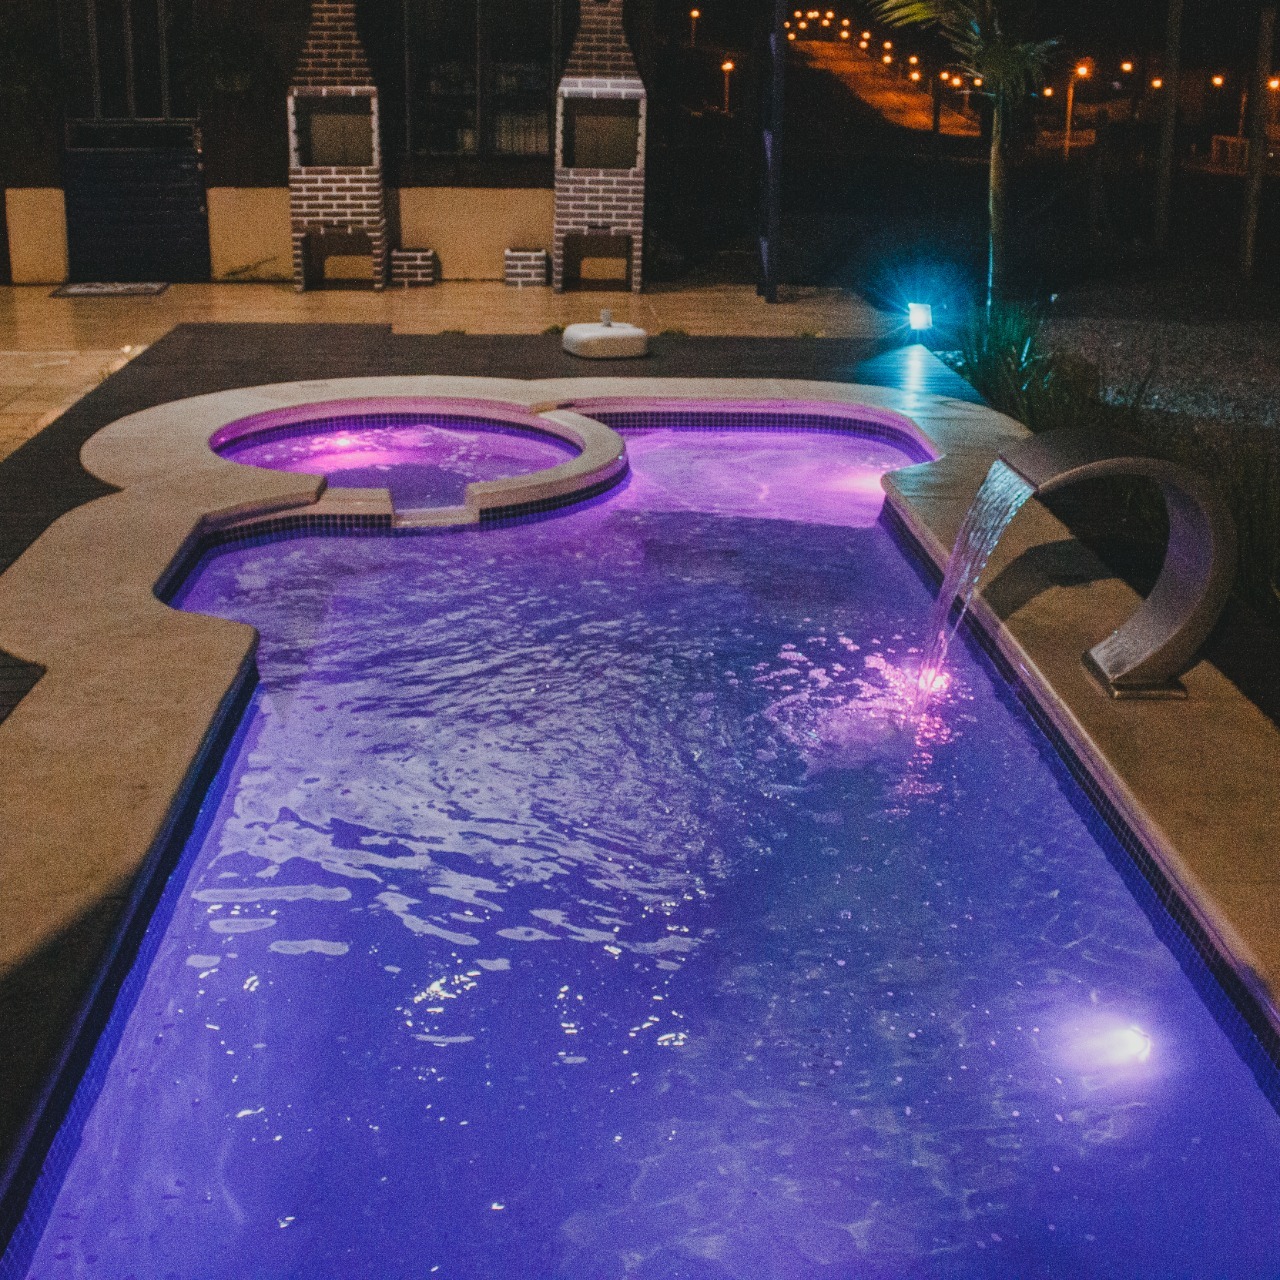 How to choose fiberglass pool lighting?